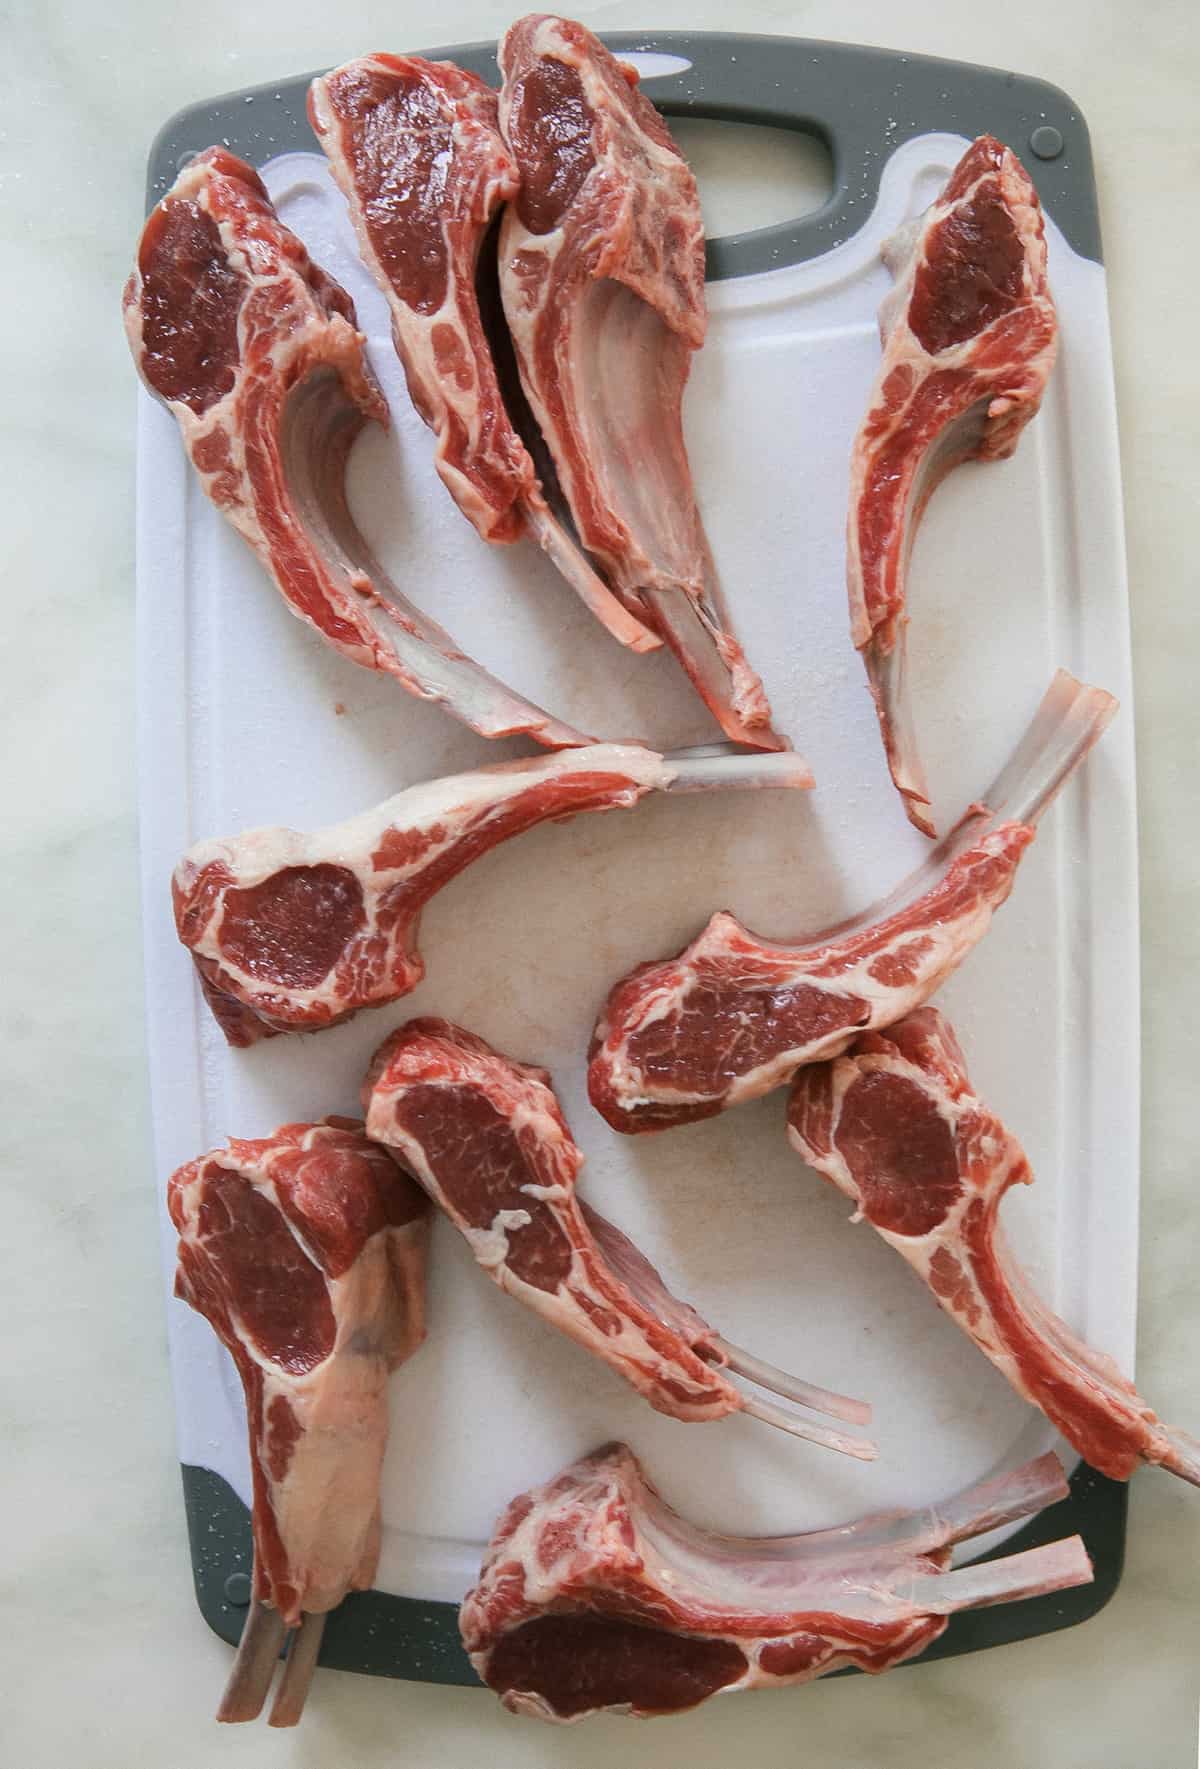 Raw lamb chops on cutting board. 